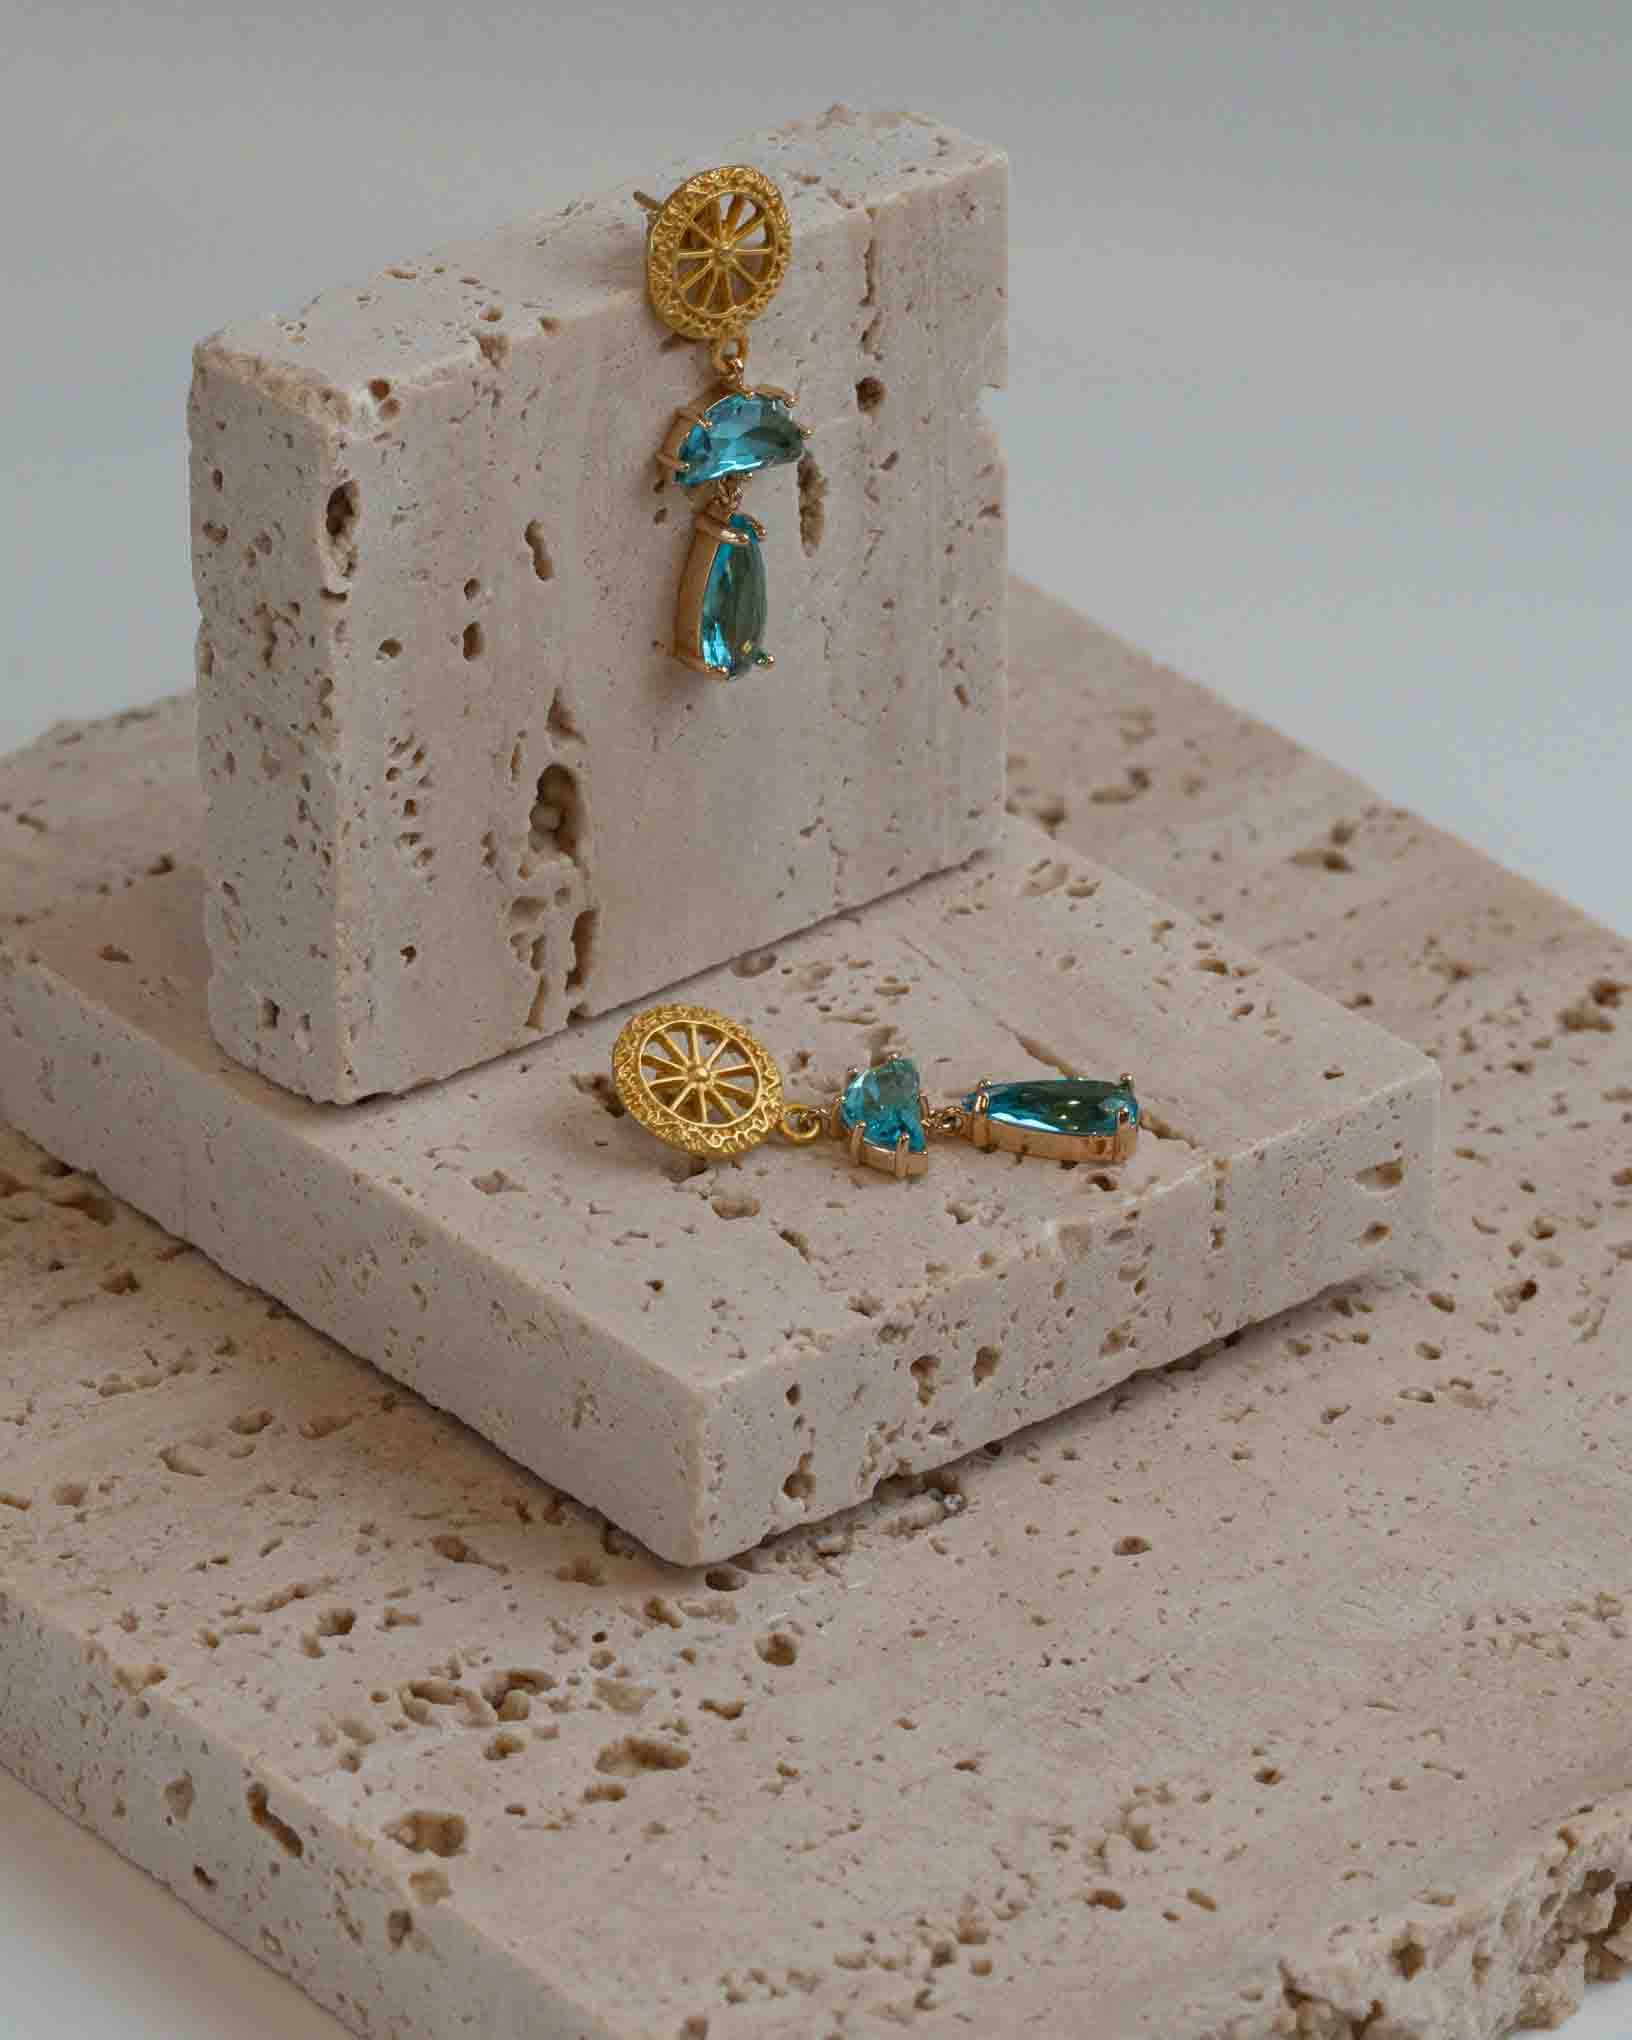 Ohrring Marina della Lobra aus der Kollektion I Classici von Donna Rachele Jewelry